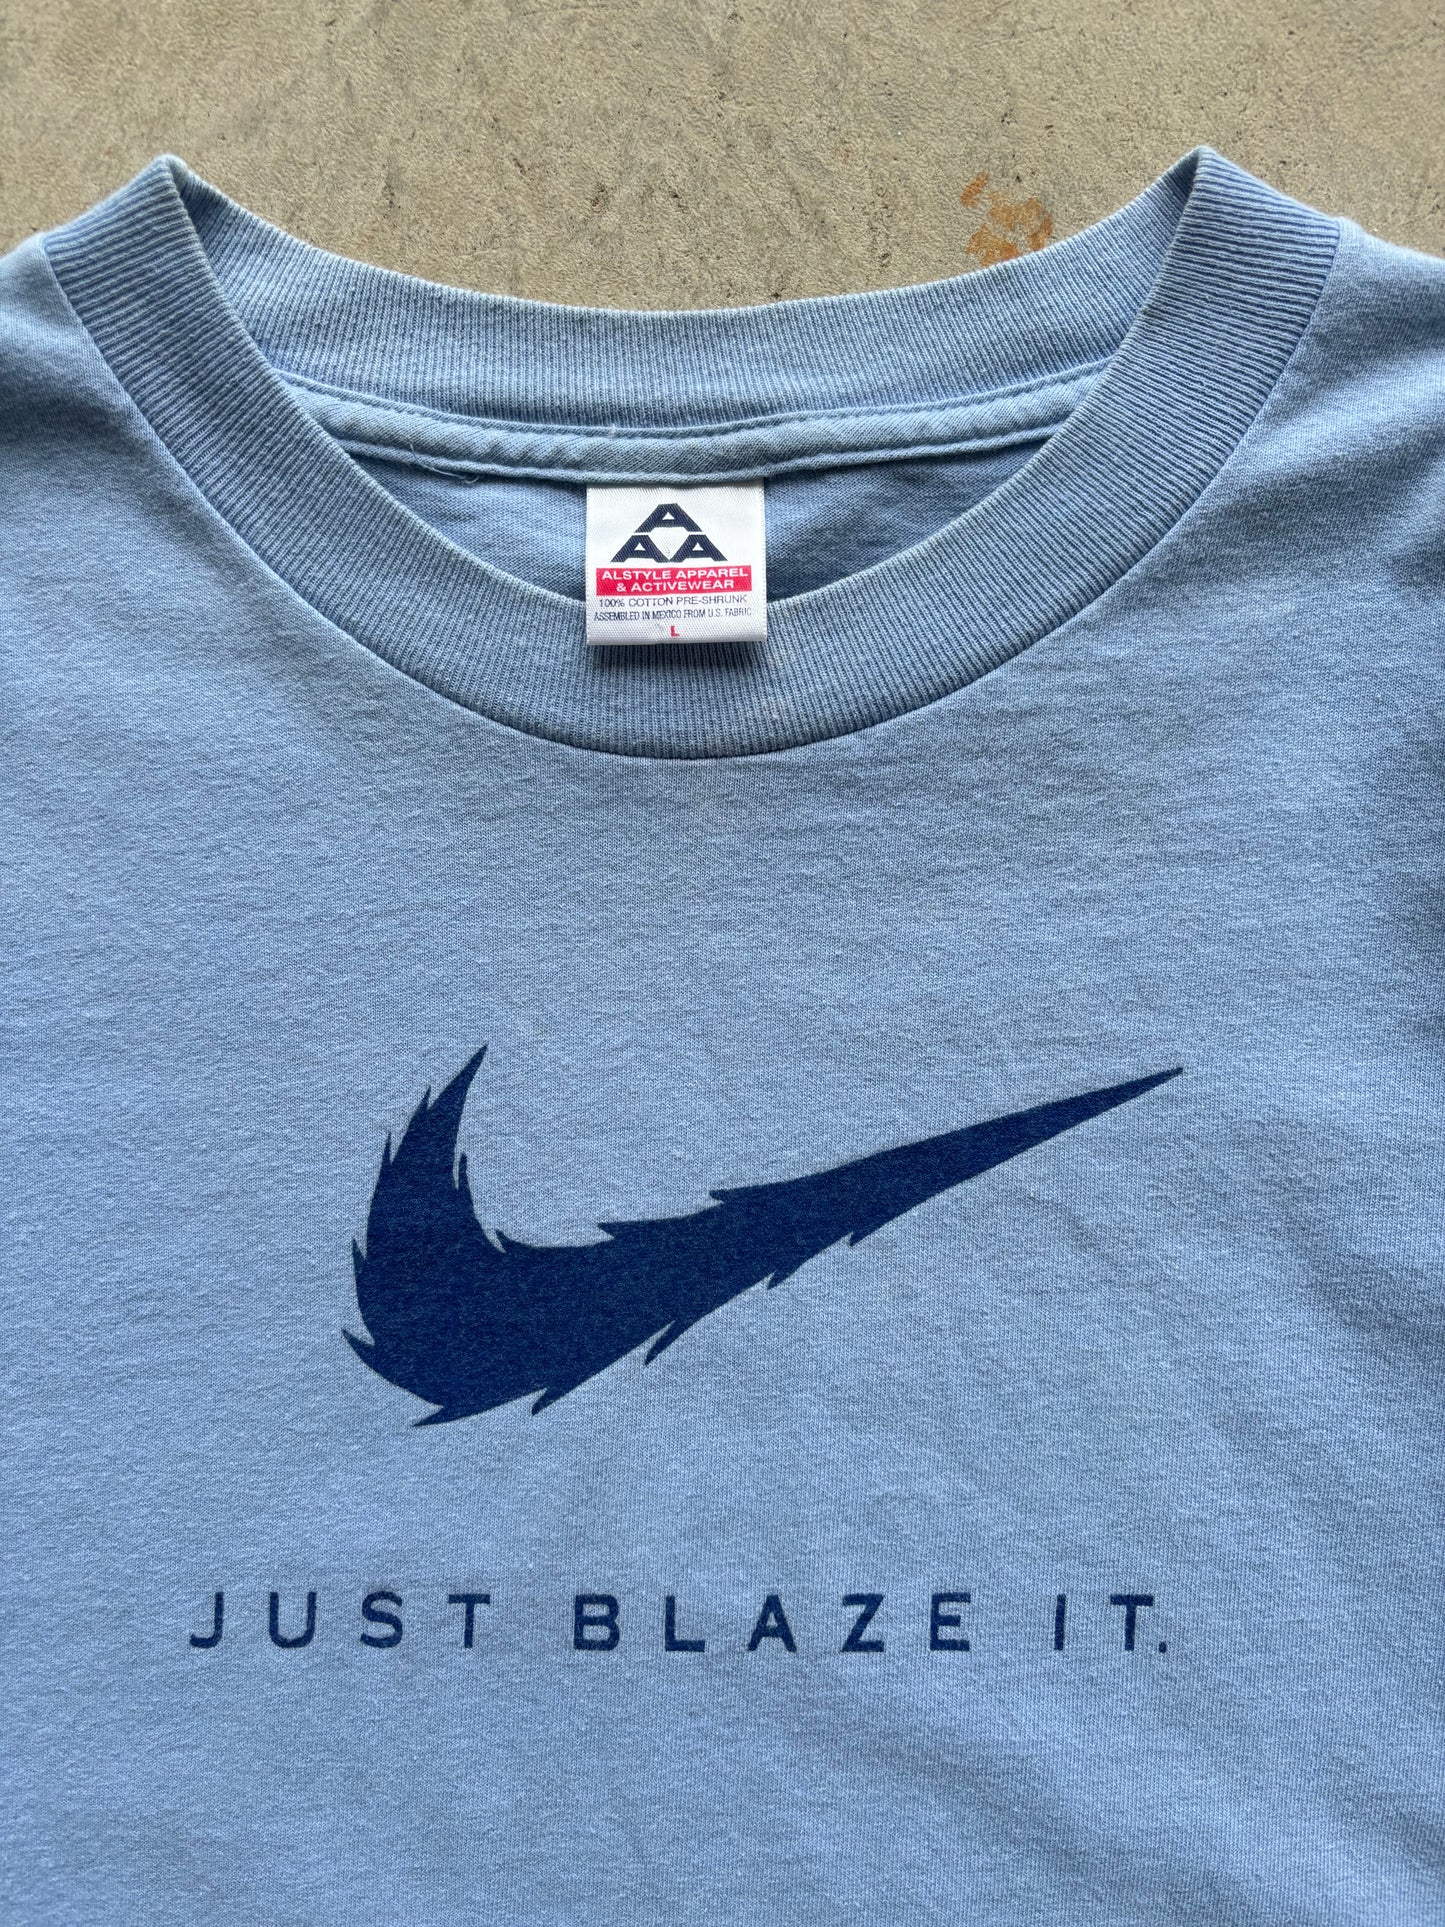 Early 2000's Just Blaze It Nike Parody Tee Size Large